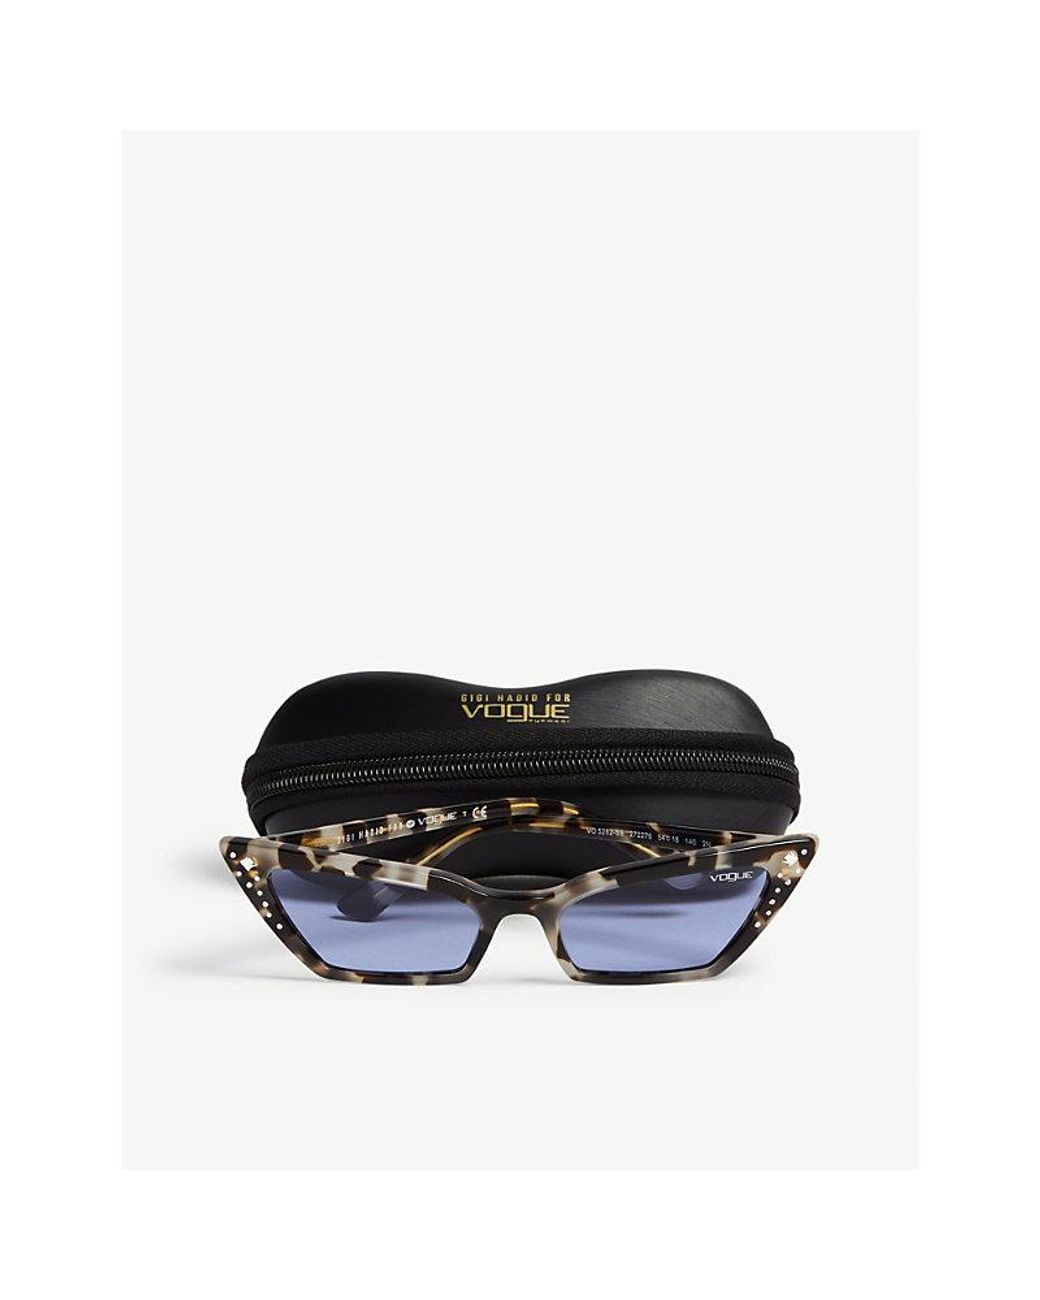 Vogue Gigi Hadid Super Cat-eye Frame Havana Acetate Sunglasses in